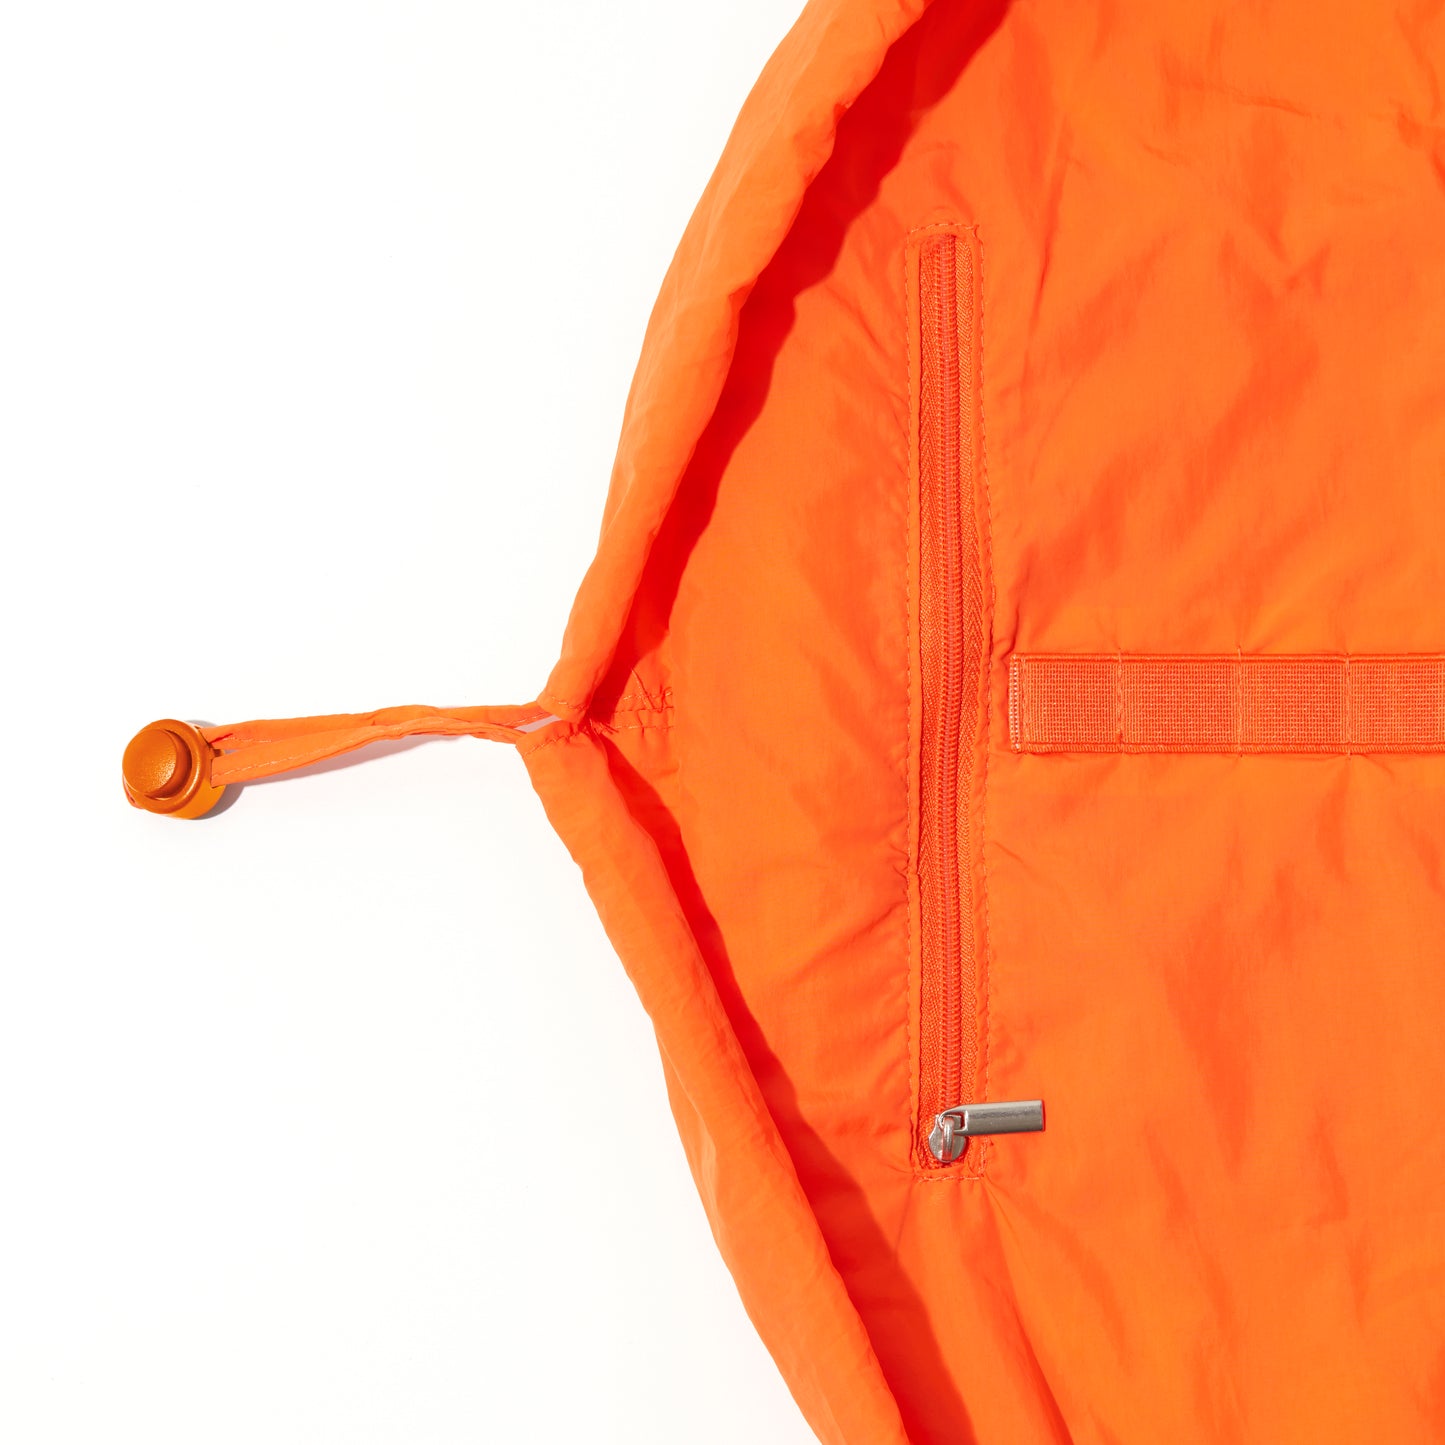 The Flat Lay Co. Drawstring Makeup Bag in Orange Parachute